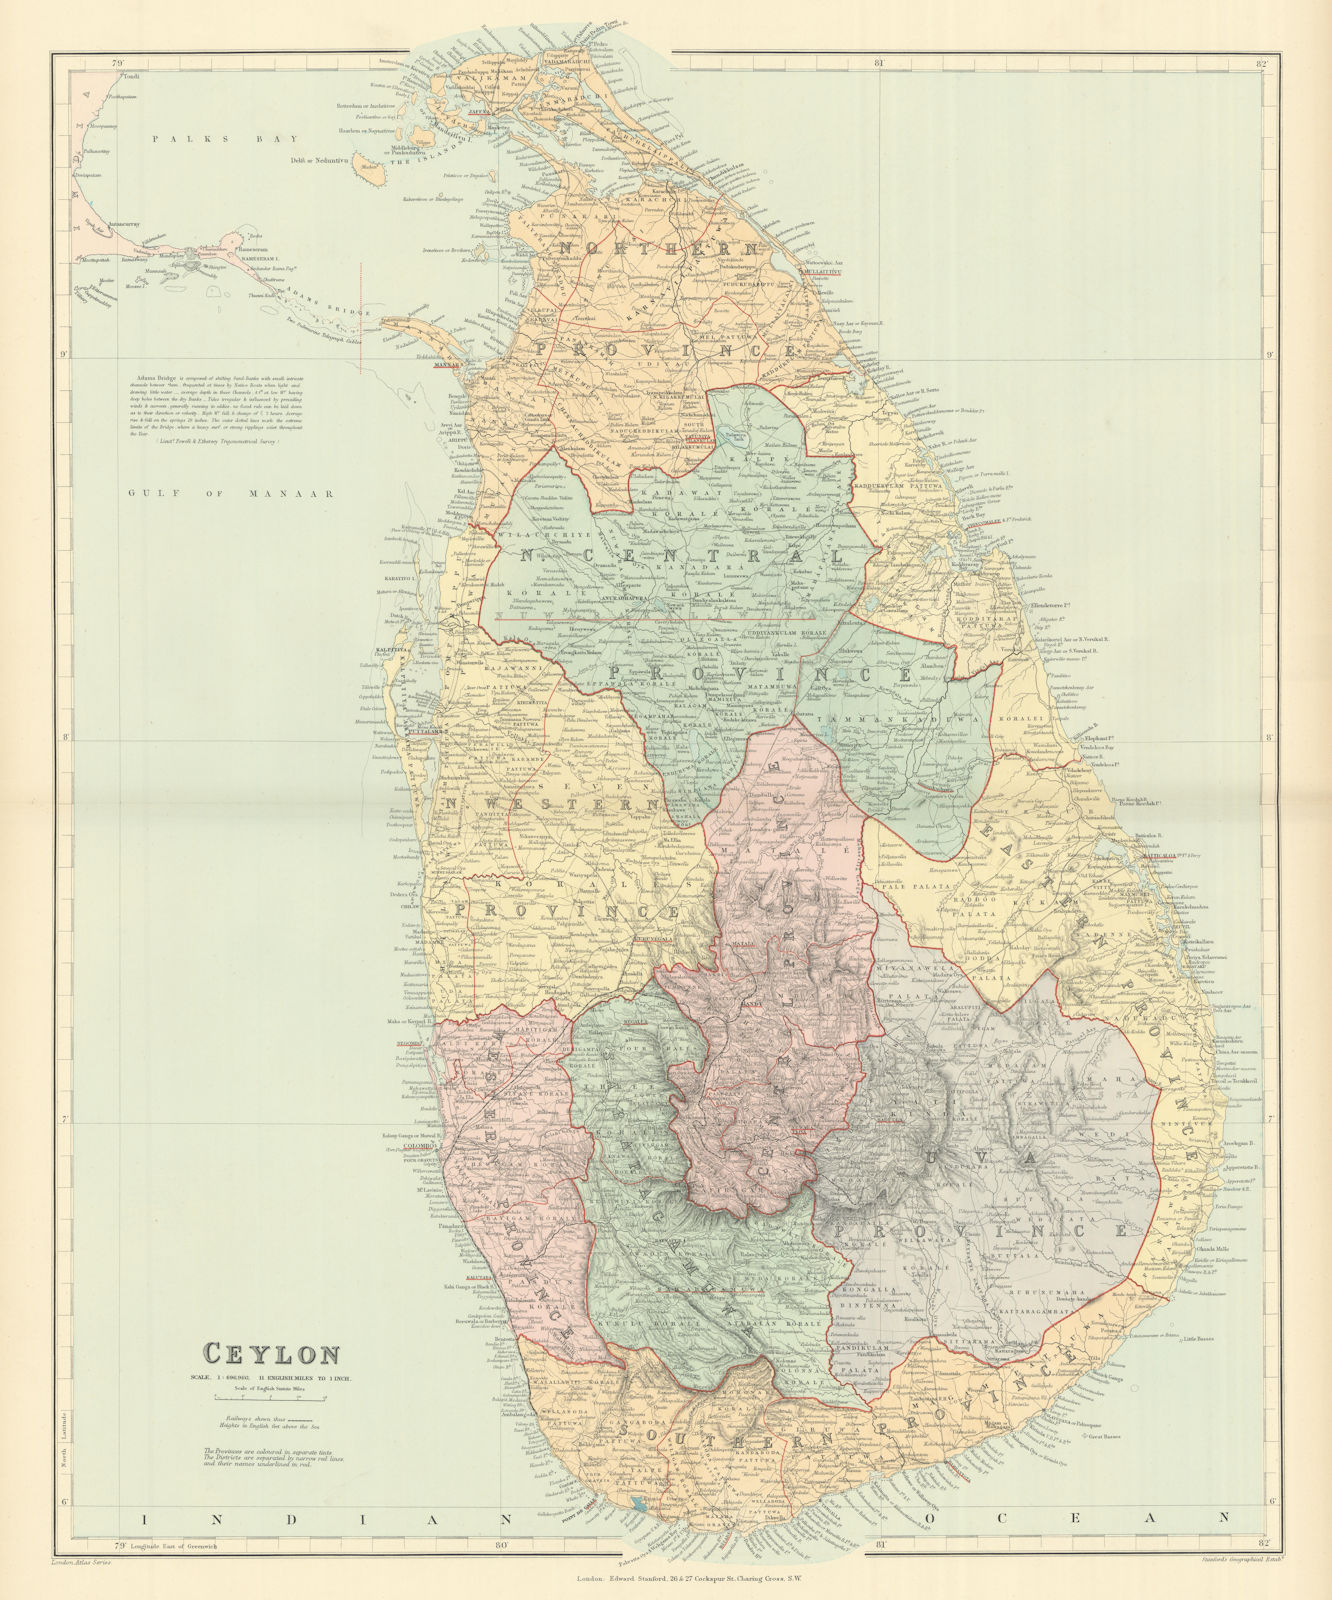 Associate Product Ceylon. Sri Lanka. Provinces & railways. Large 66x53cm. STANFORD 1894 old map